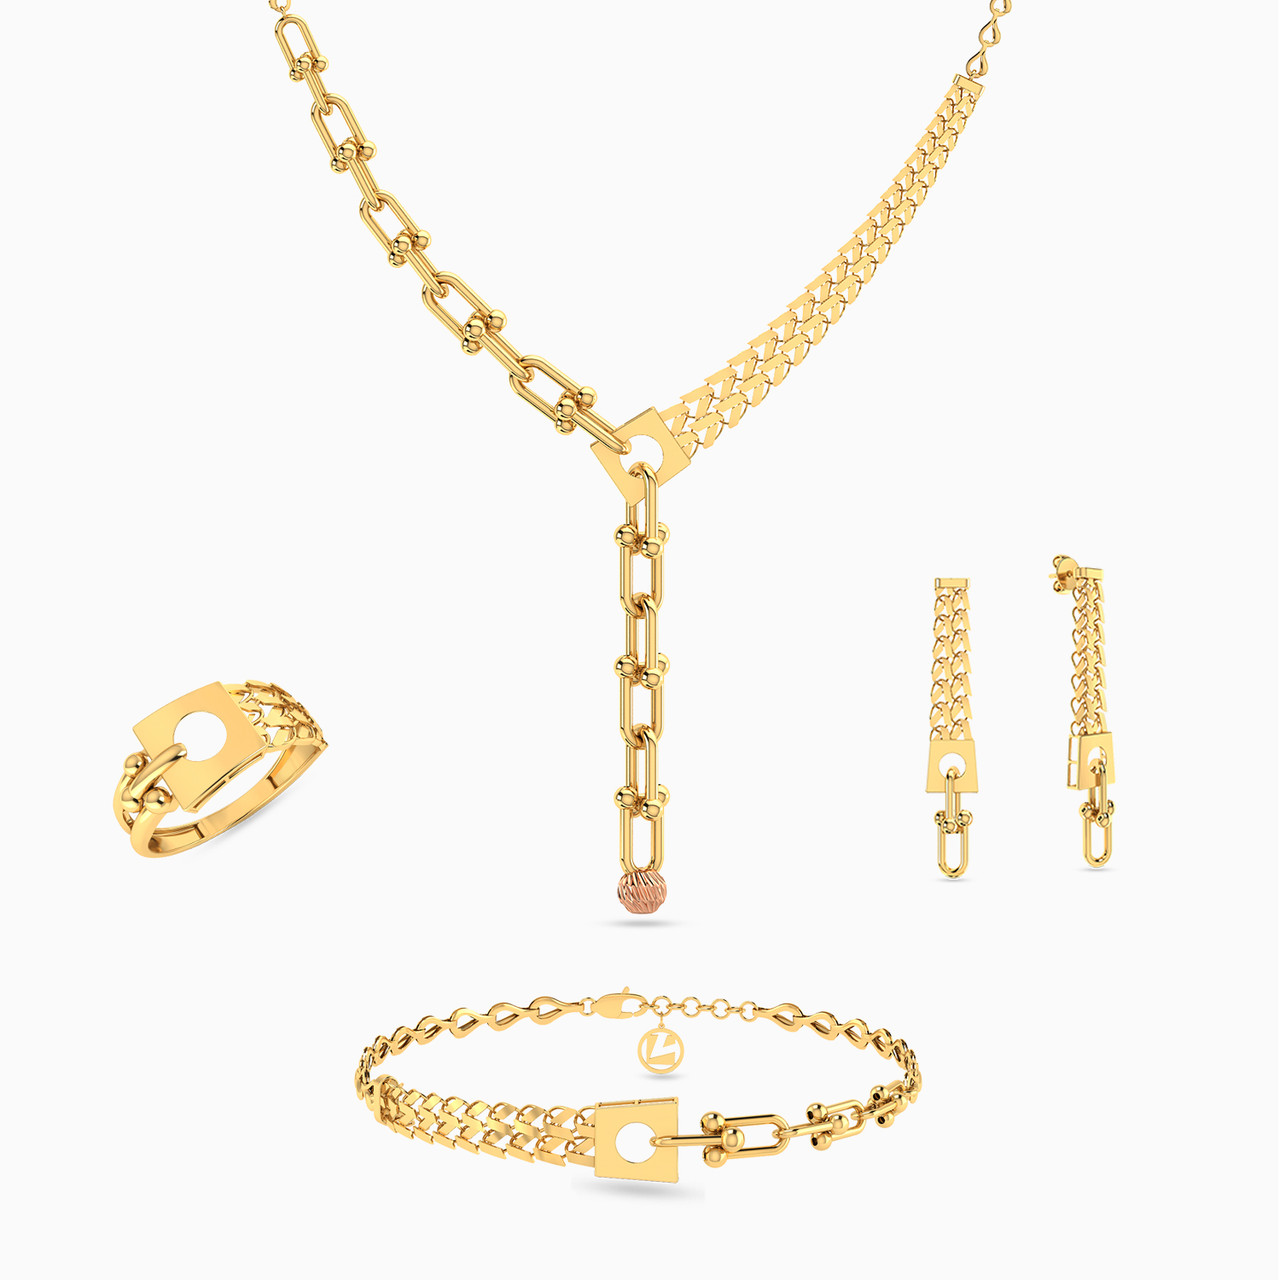 21K Gold Jewelry Set -4 Pieces